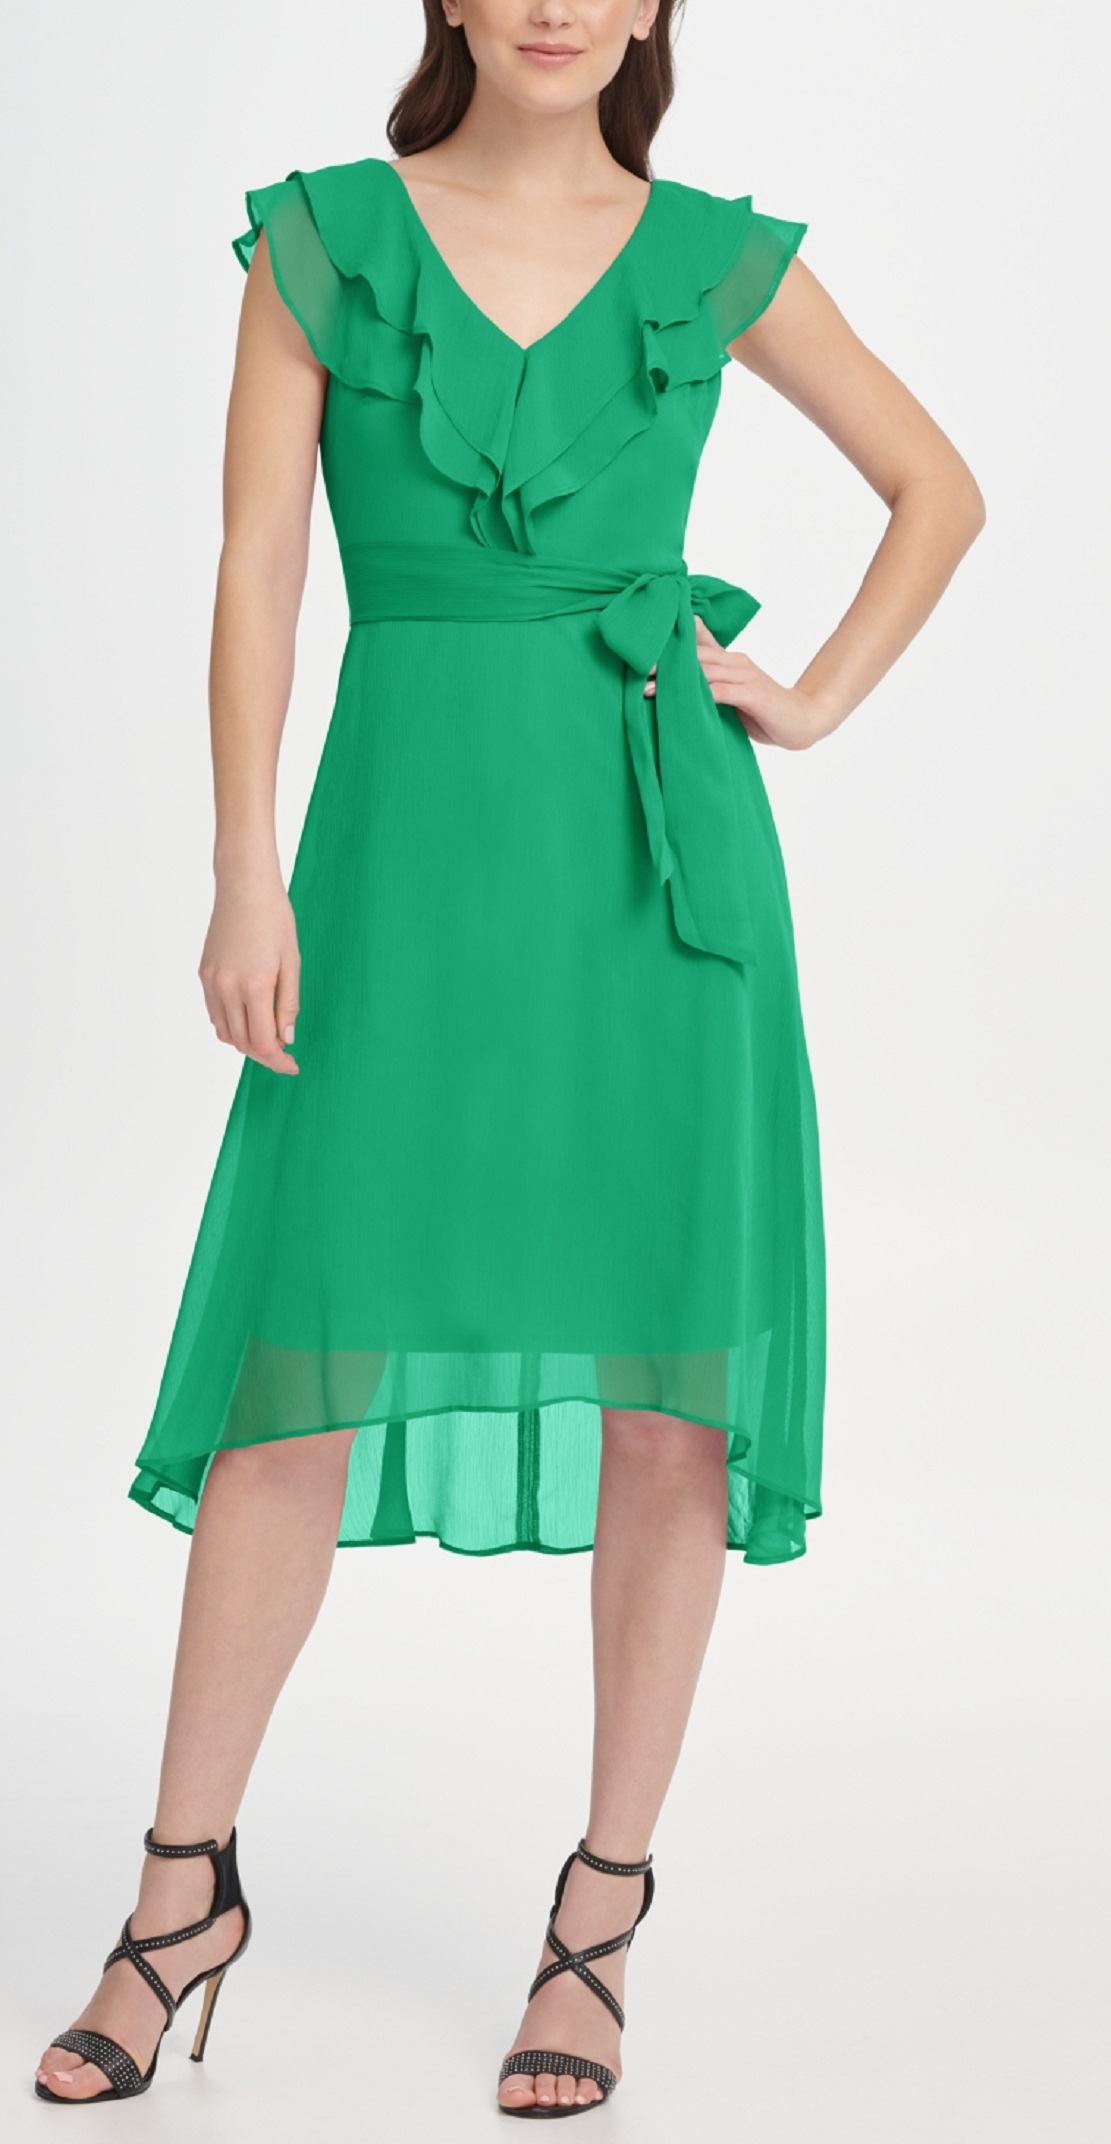 DKNY Women's Double Ruffle-Collar Dress Green Size 2